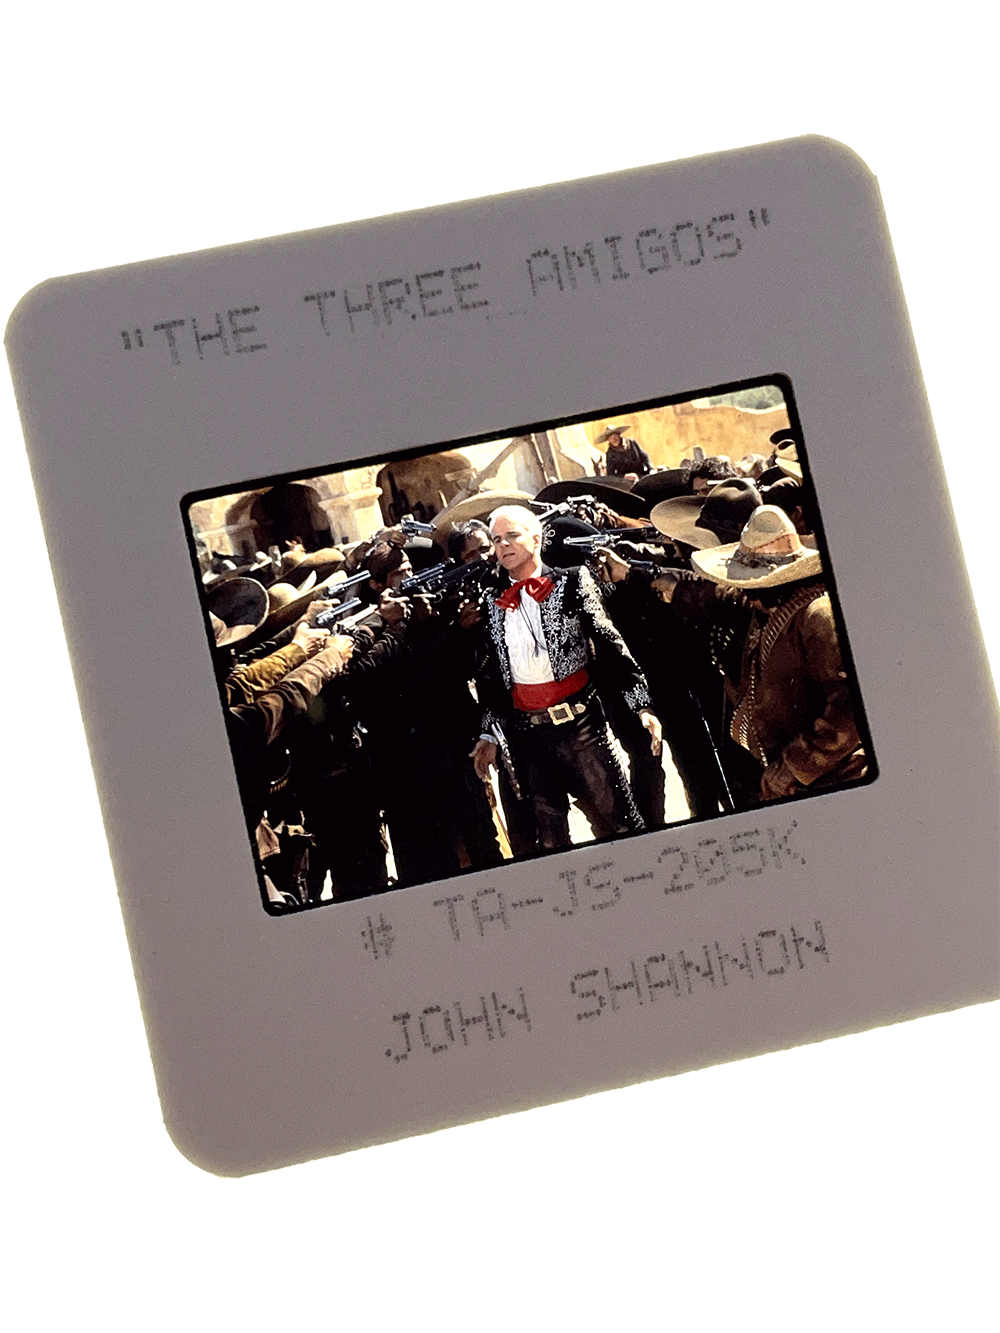 Steve Martin in THE THREE AMIGOS, slide photo by John Shannon.